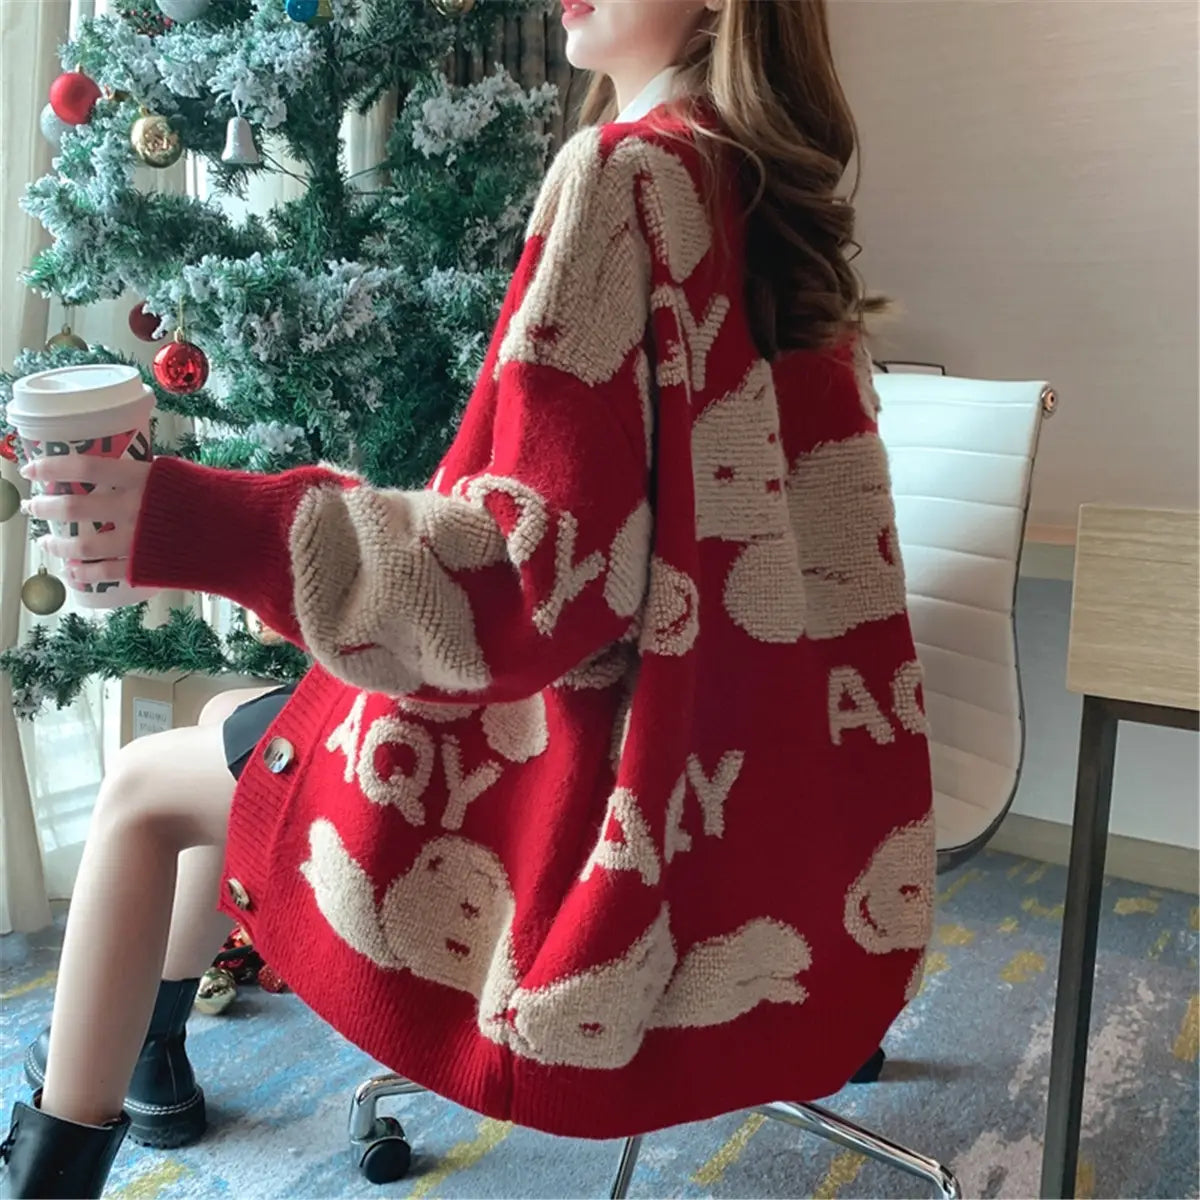 Lovemi – Damen-Pullover-Mantel, koreanisches lockeres Netz, rot gestrickt